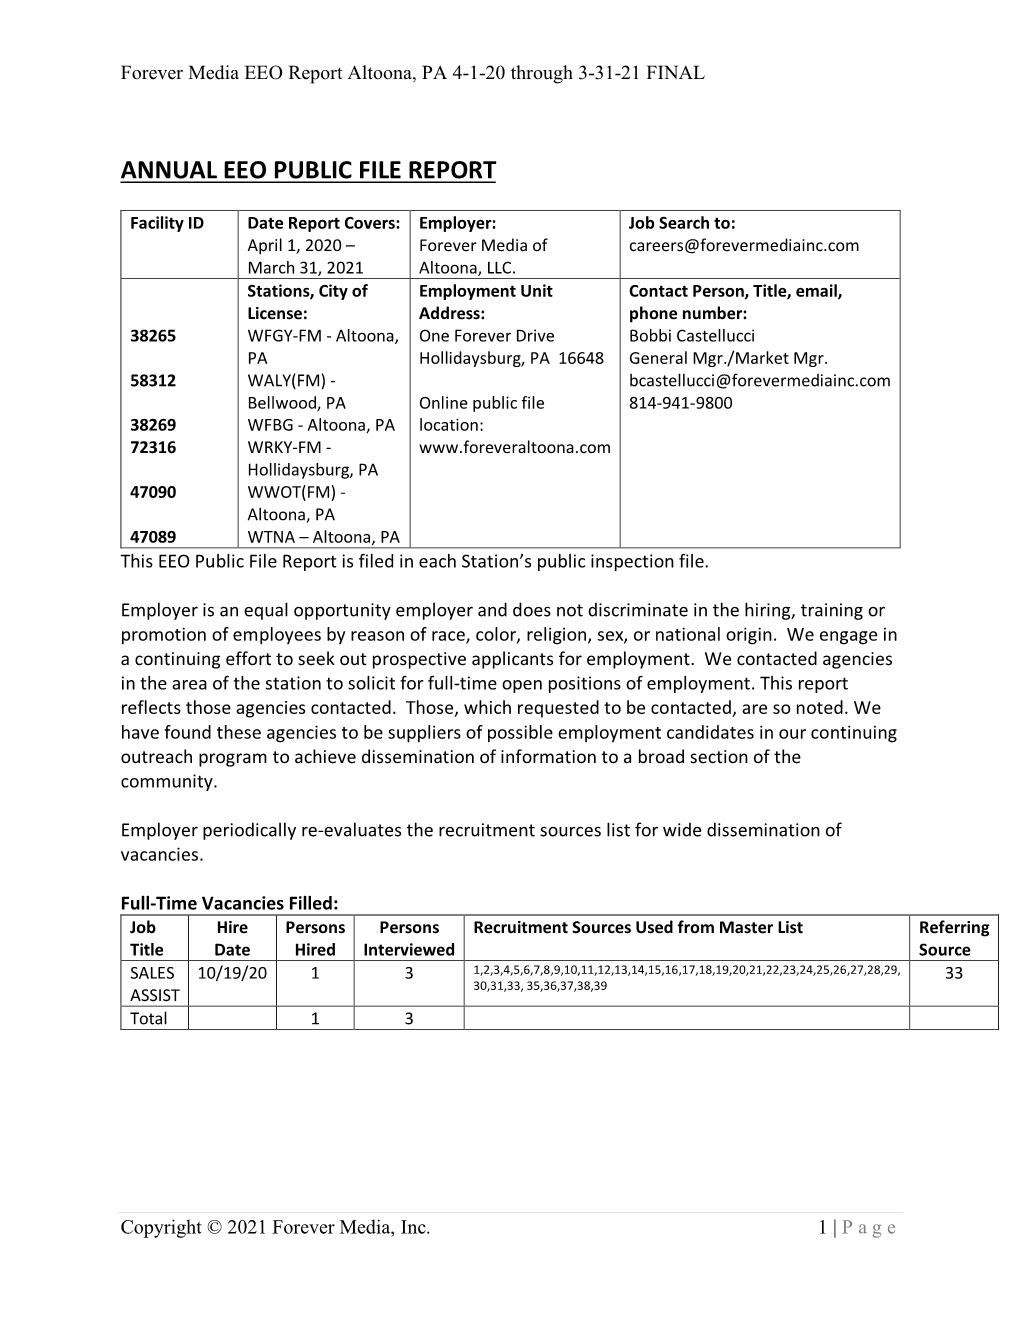 EEO Report Altoona, PA 4-1-20 Through 3-31-21 FINAL